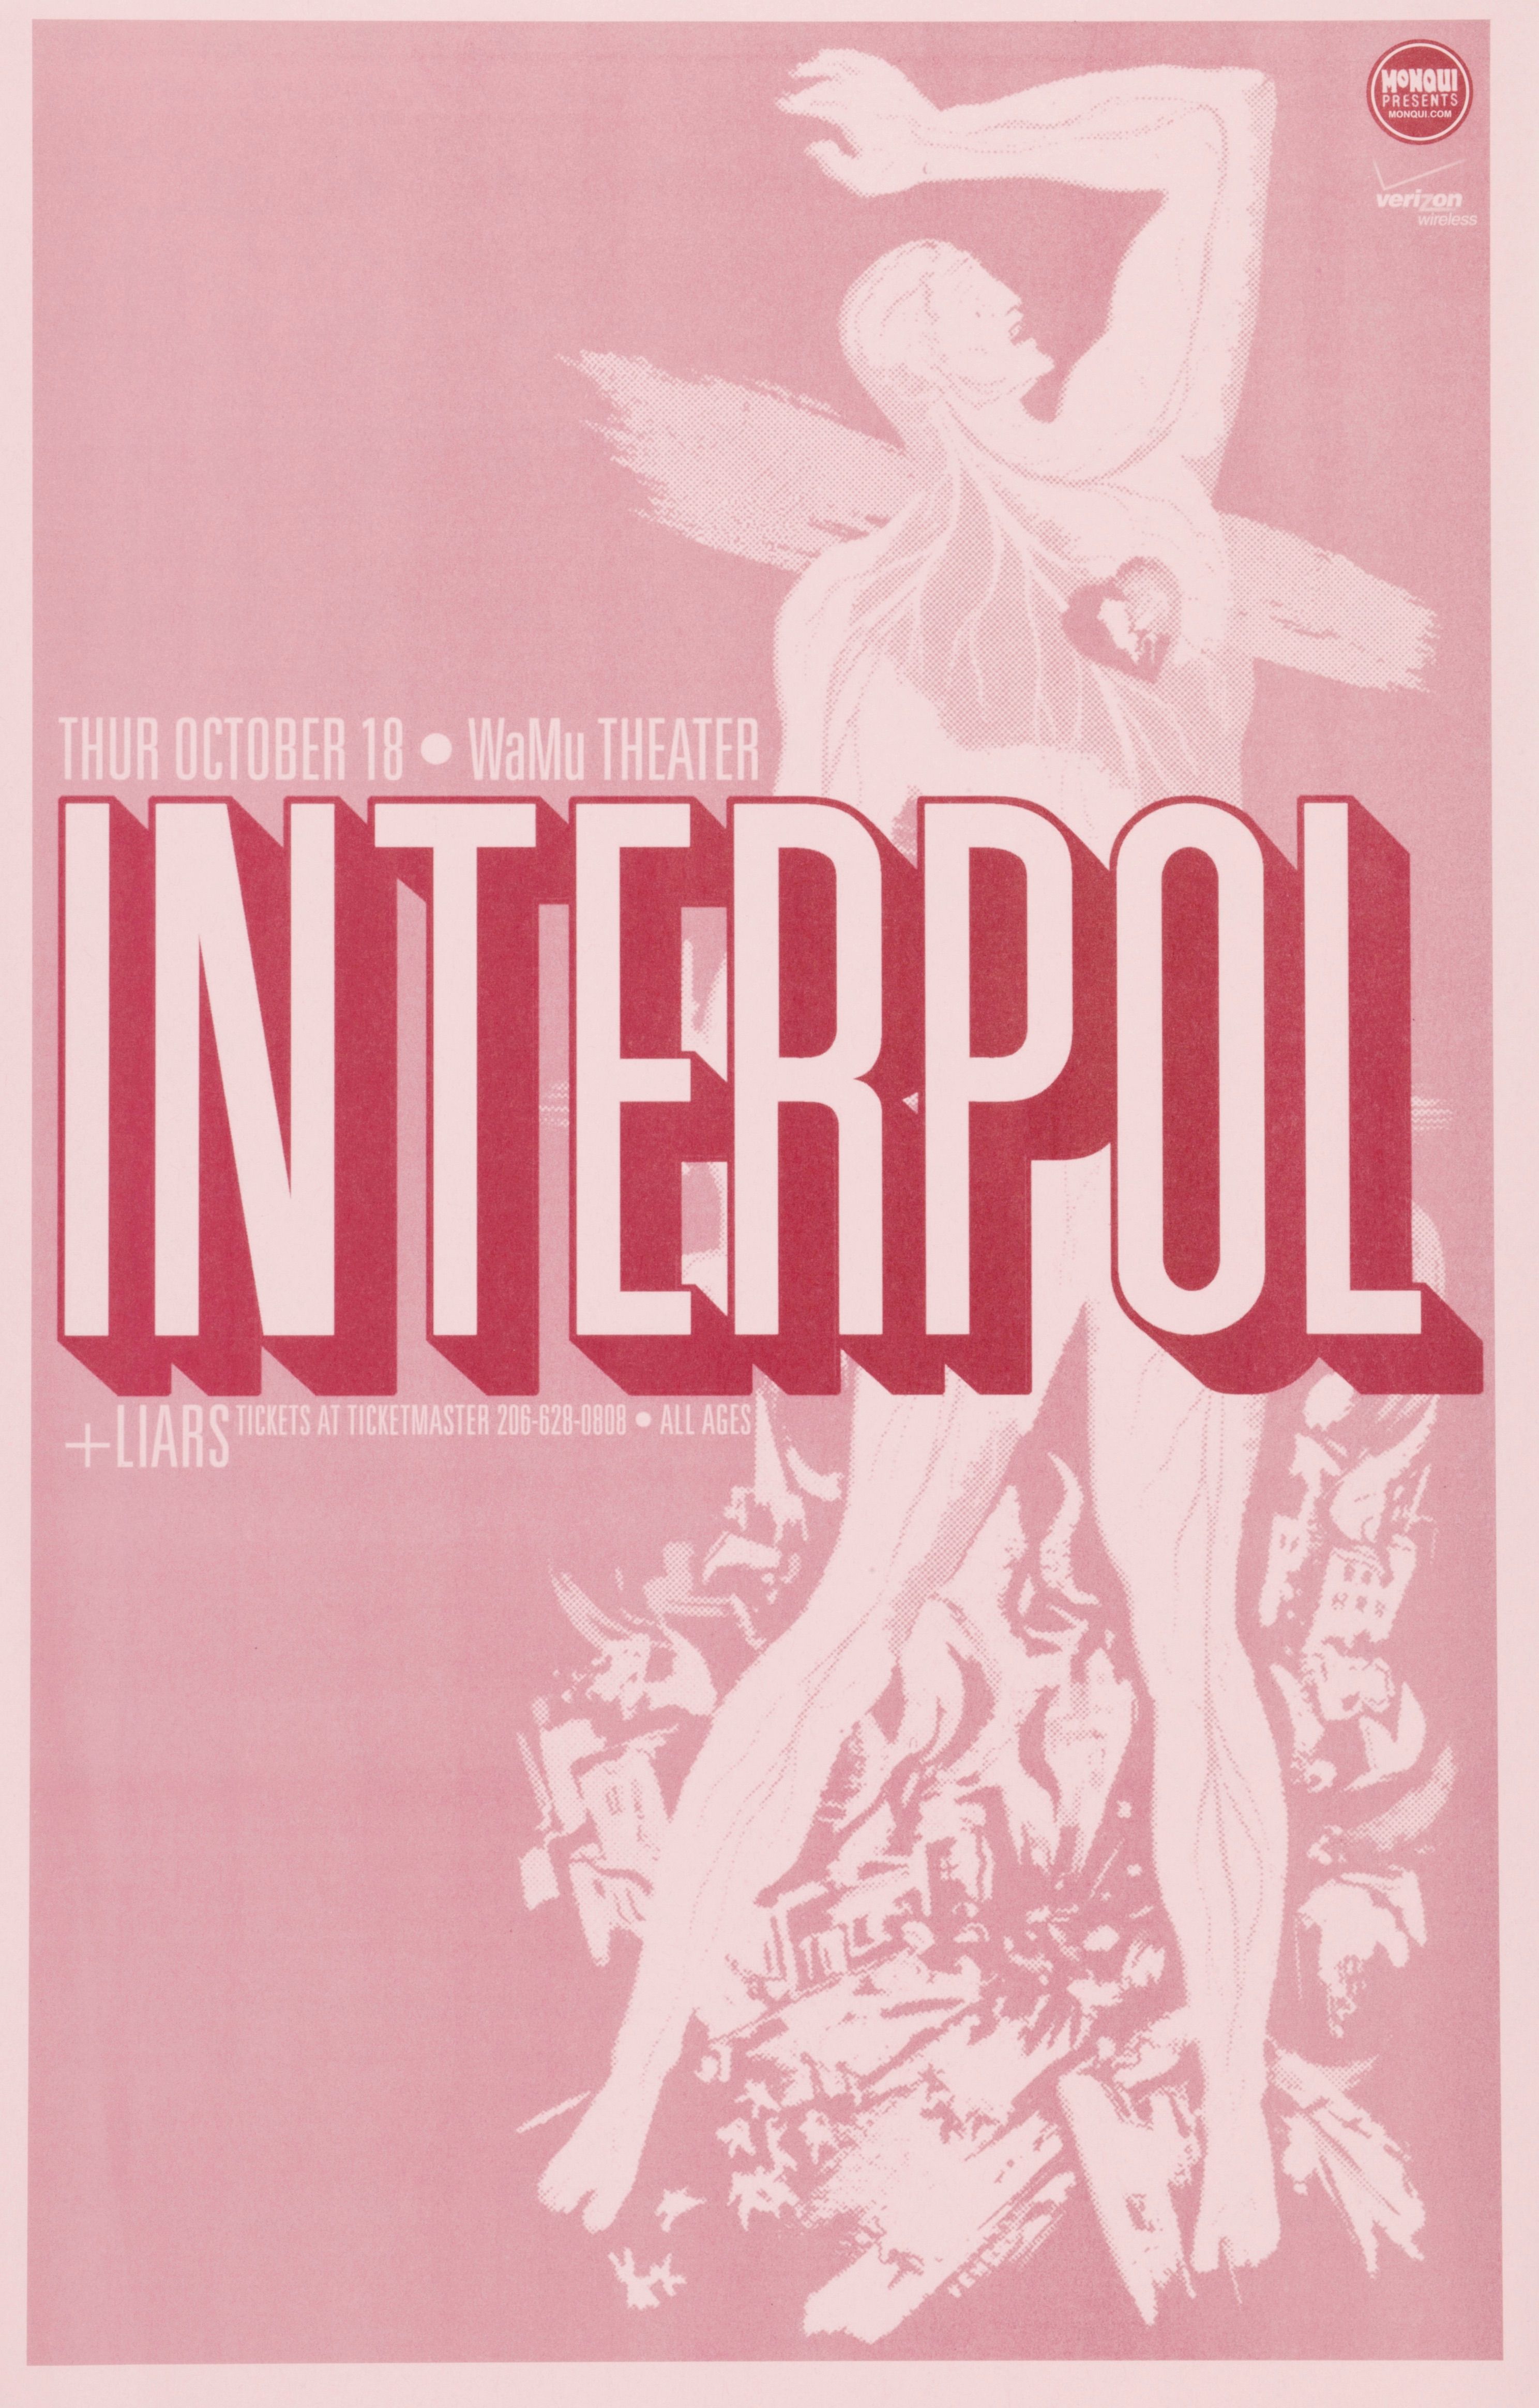 MXP-81.2 Interpol 2007 Wamu Theater  Oct 18 Concert Poster